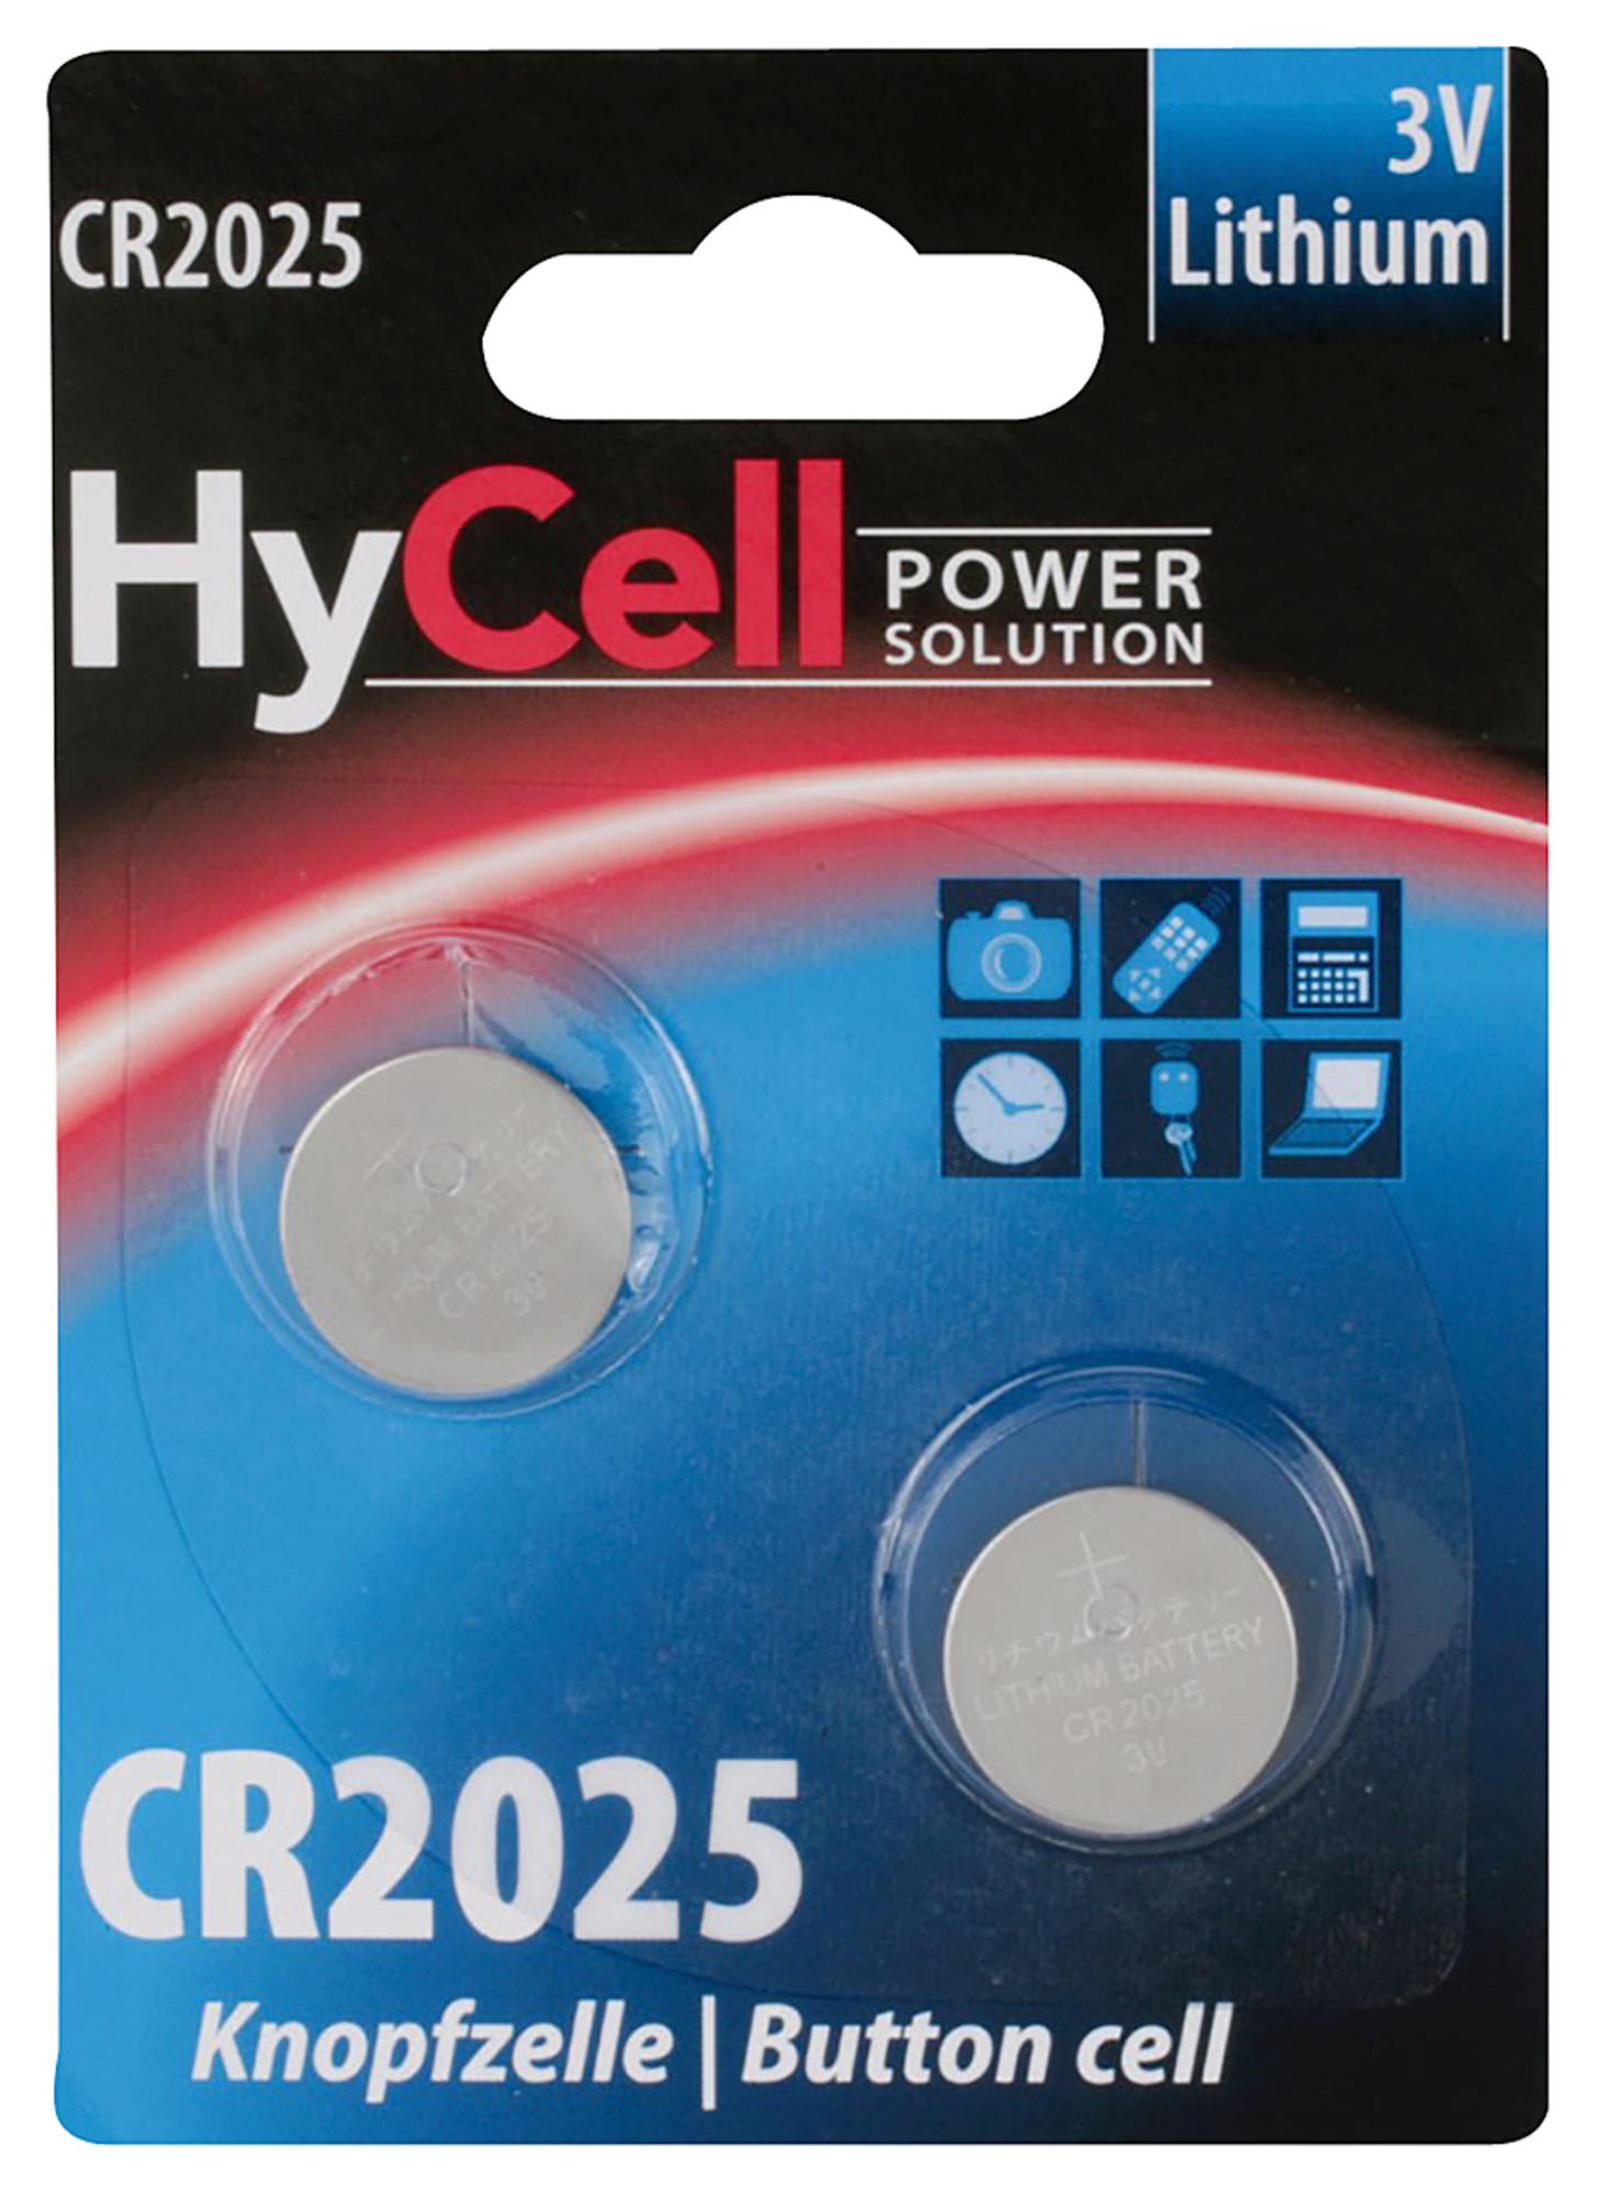 2 ANSMANN 3V Strom Knopfzellen HyCell Knopfzellen, / Knopfzelle 5020192 Stück Lithium, 2er-Pack Lithium ANSMANN CR2025